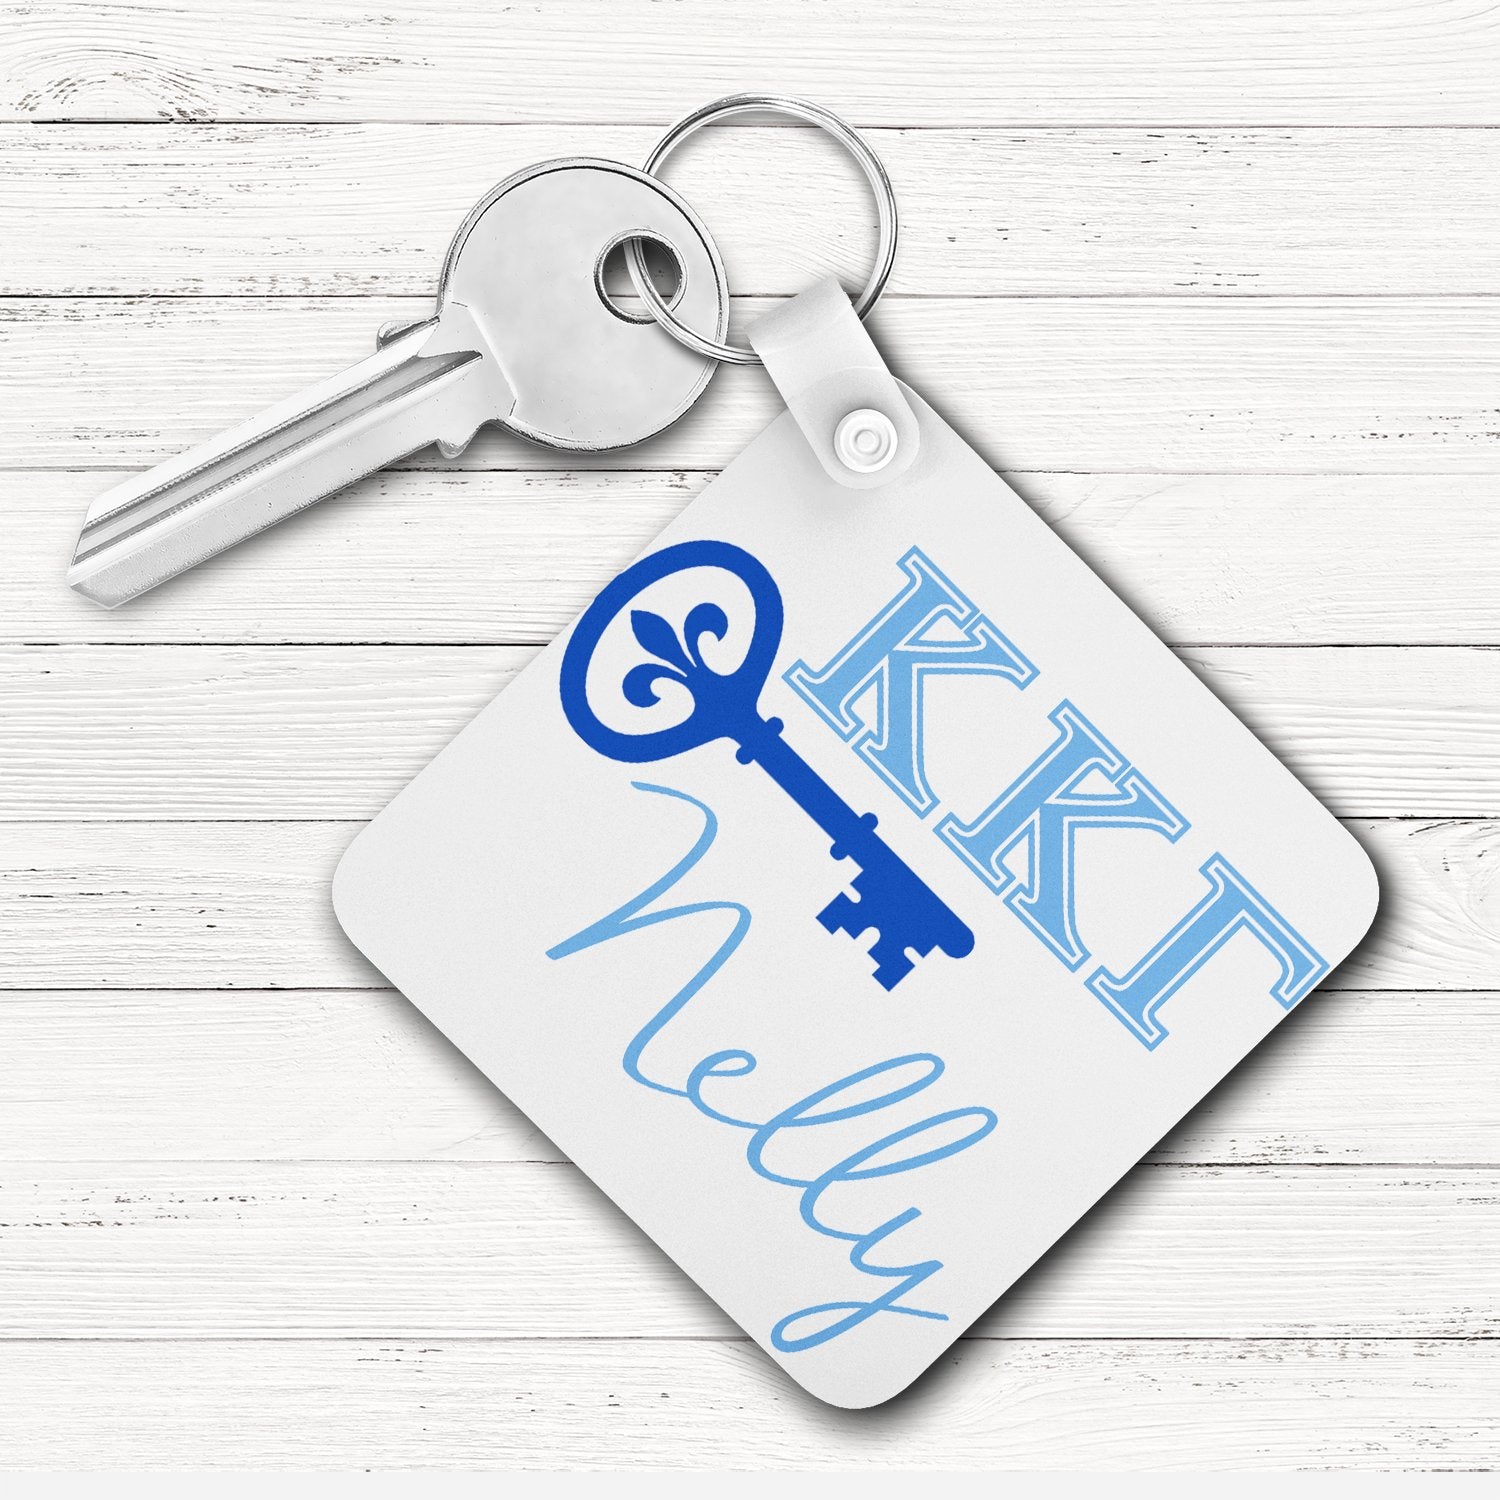 Kappa Kappa Gamma Square Key Chain 